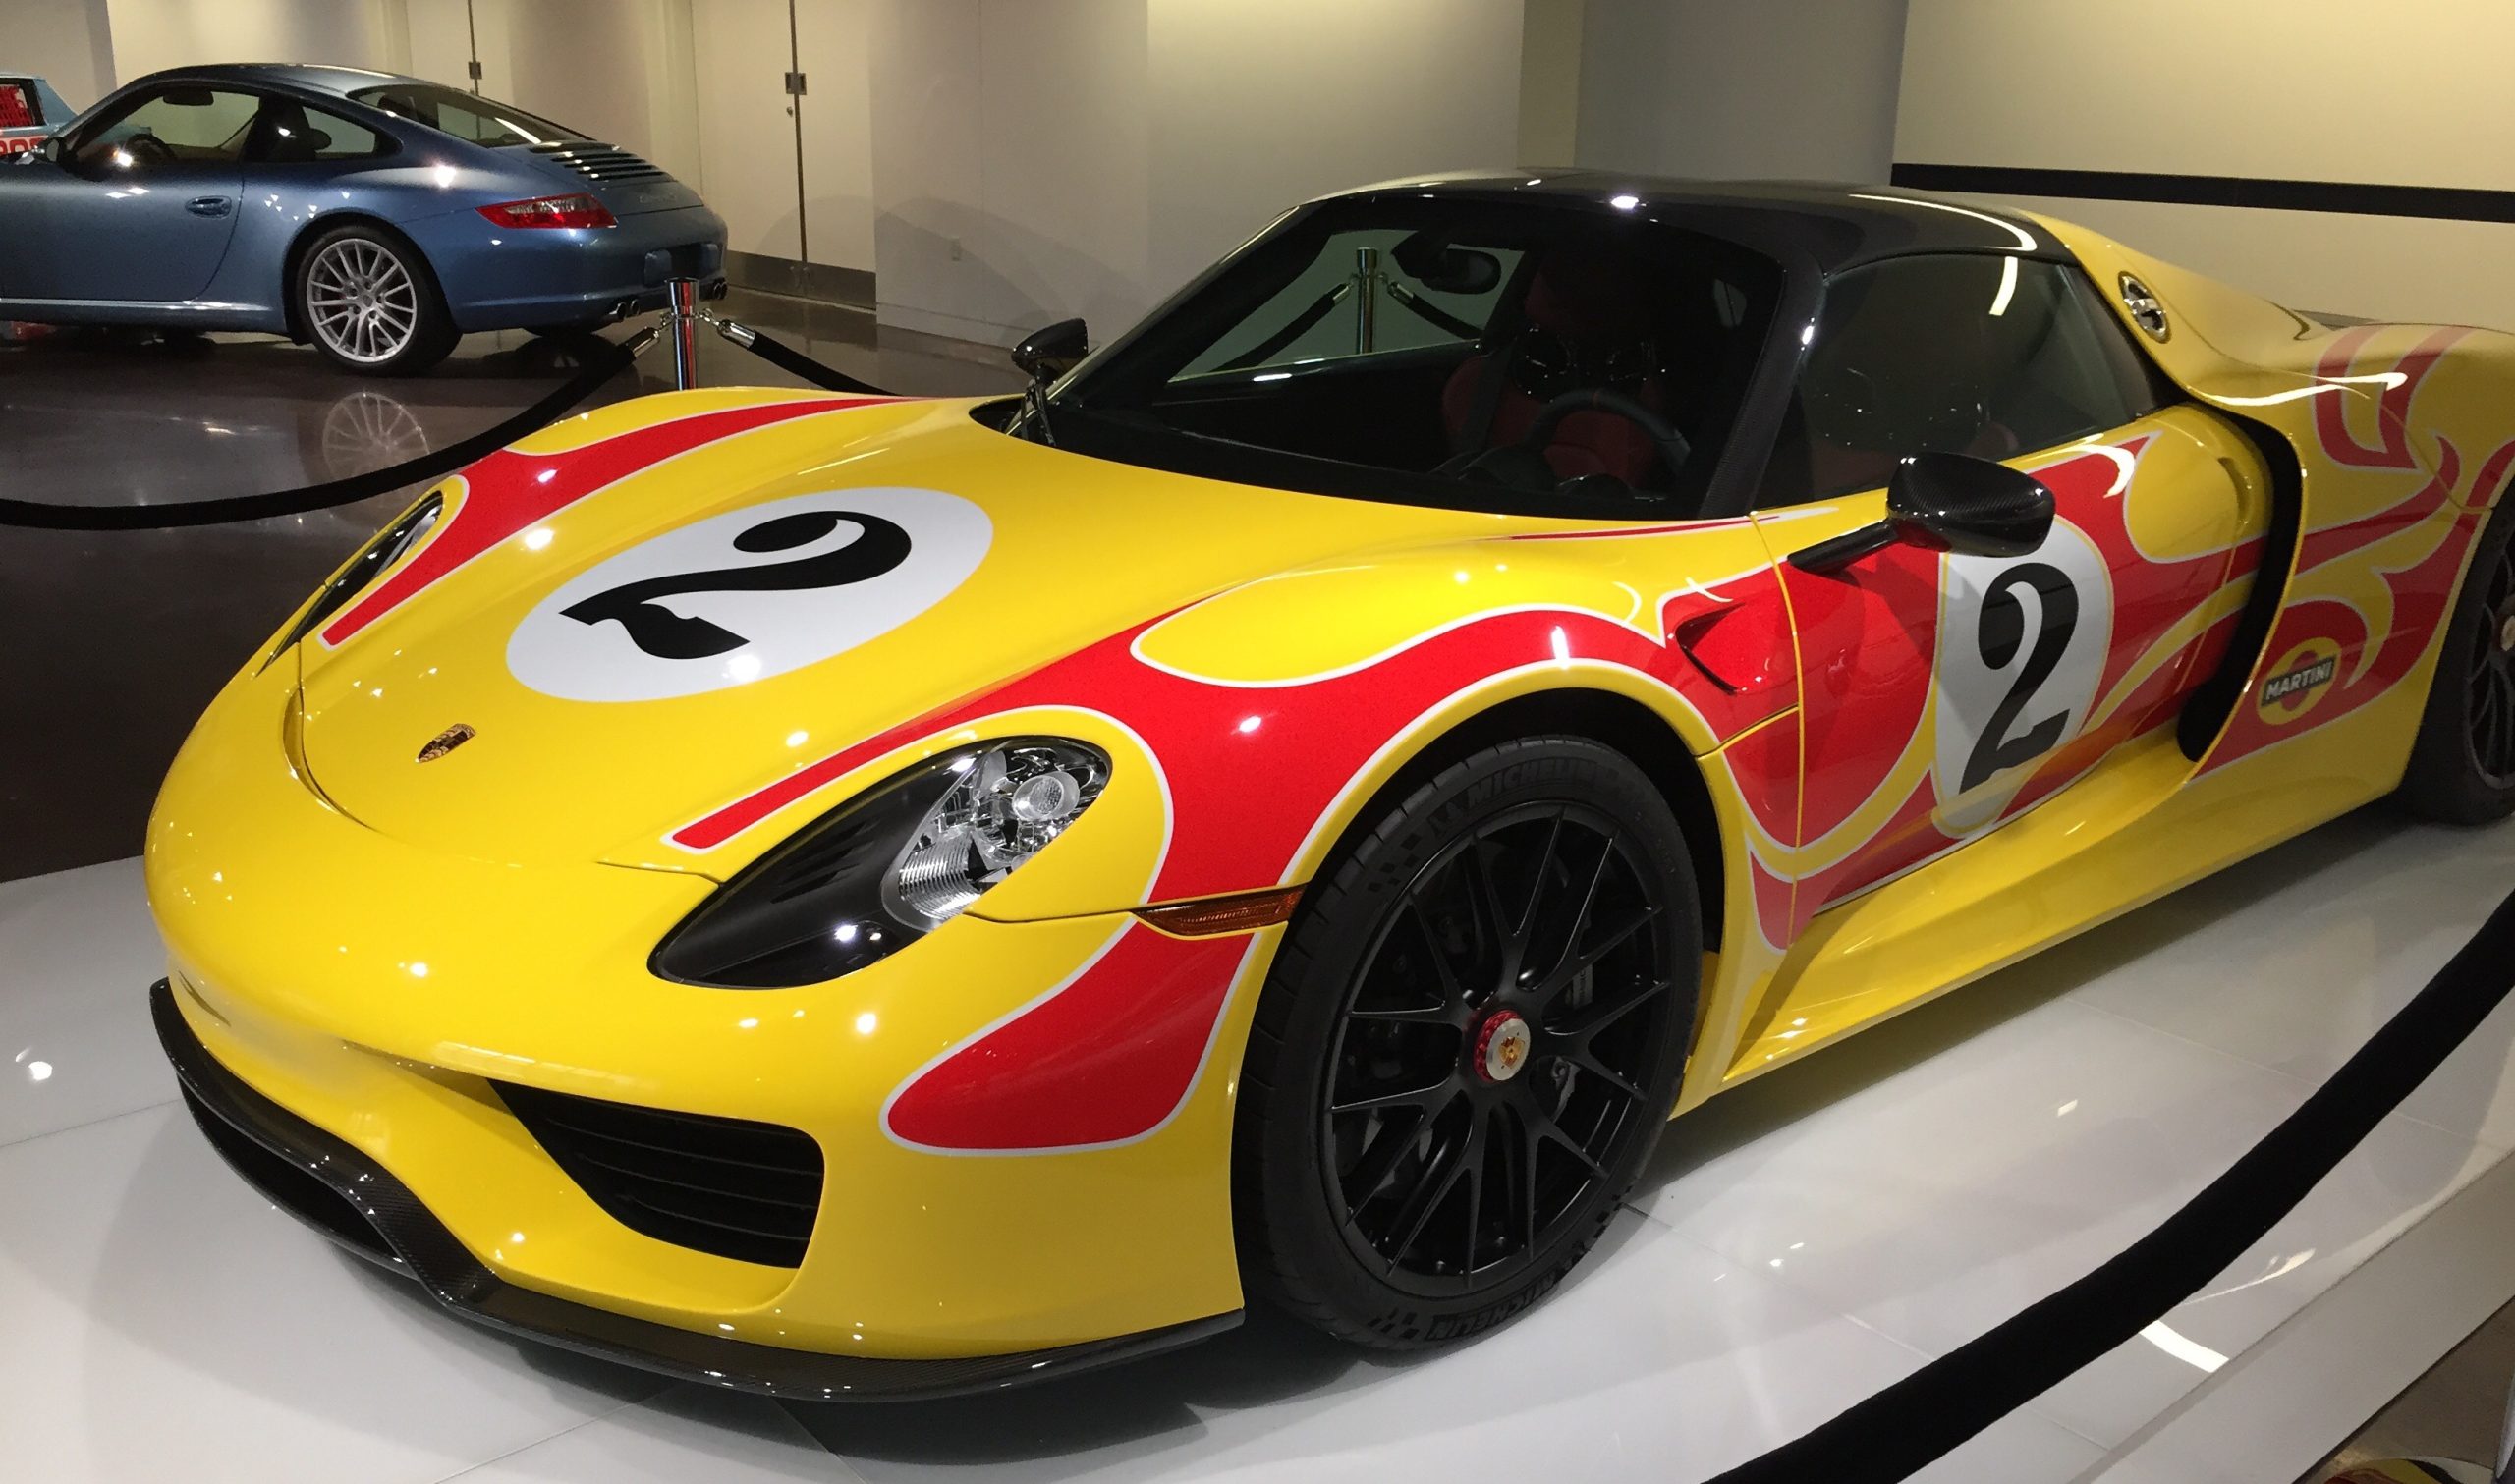 Porsche Experience Center Atlanta: heart pounding adventure on or off the track